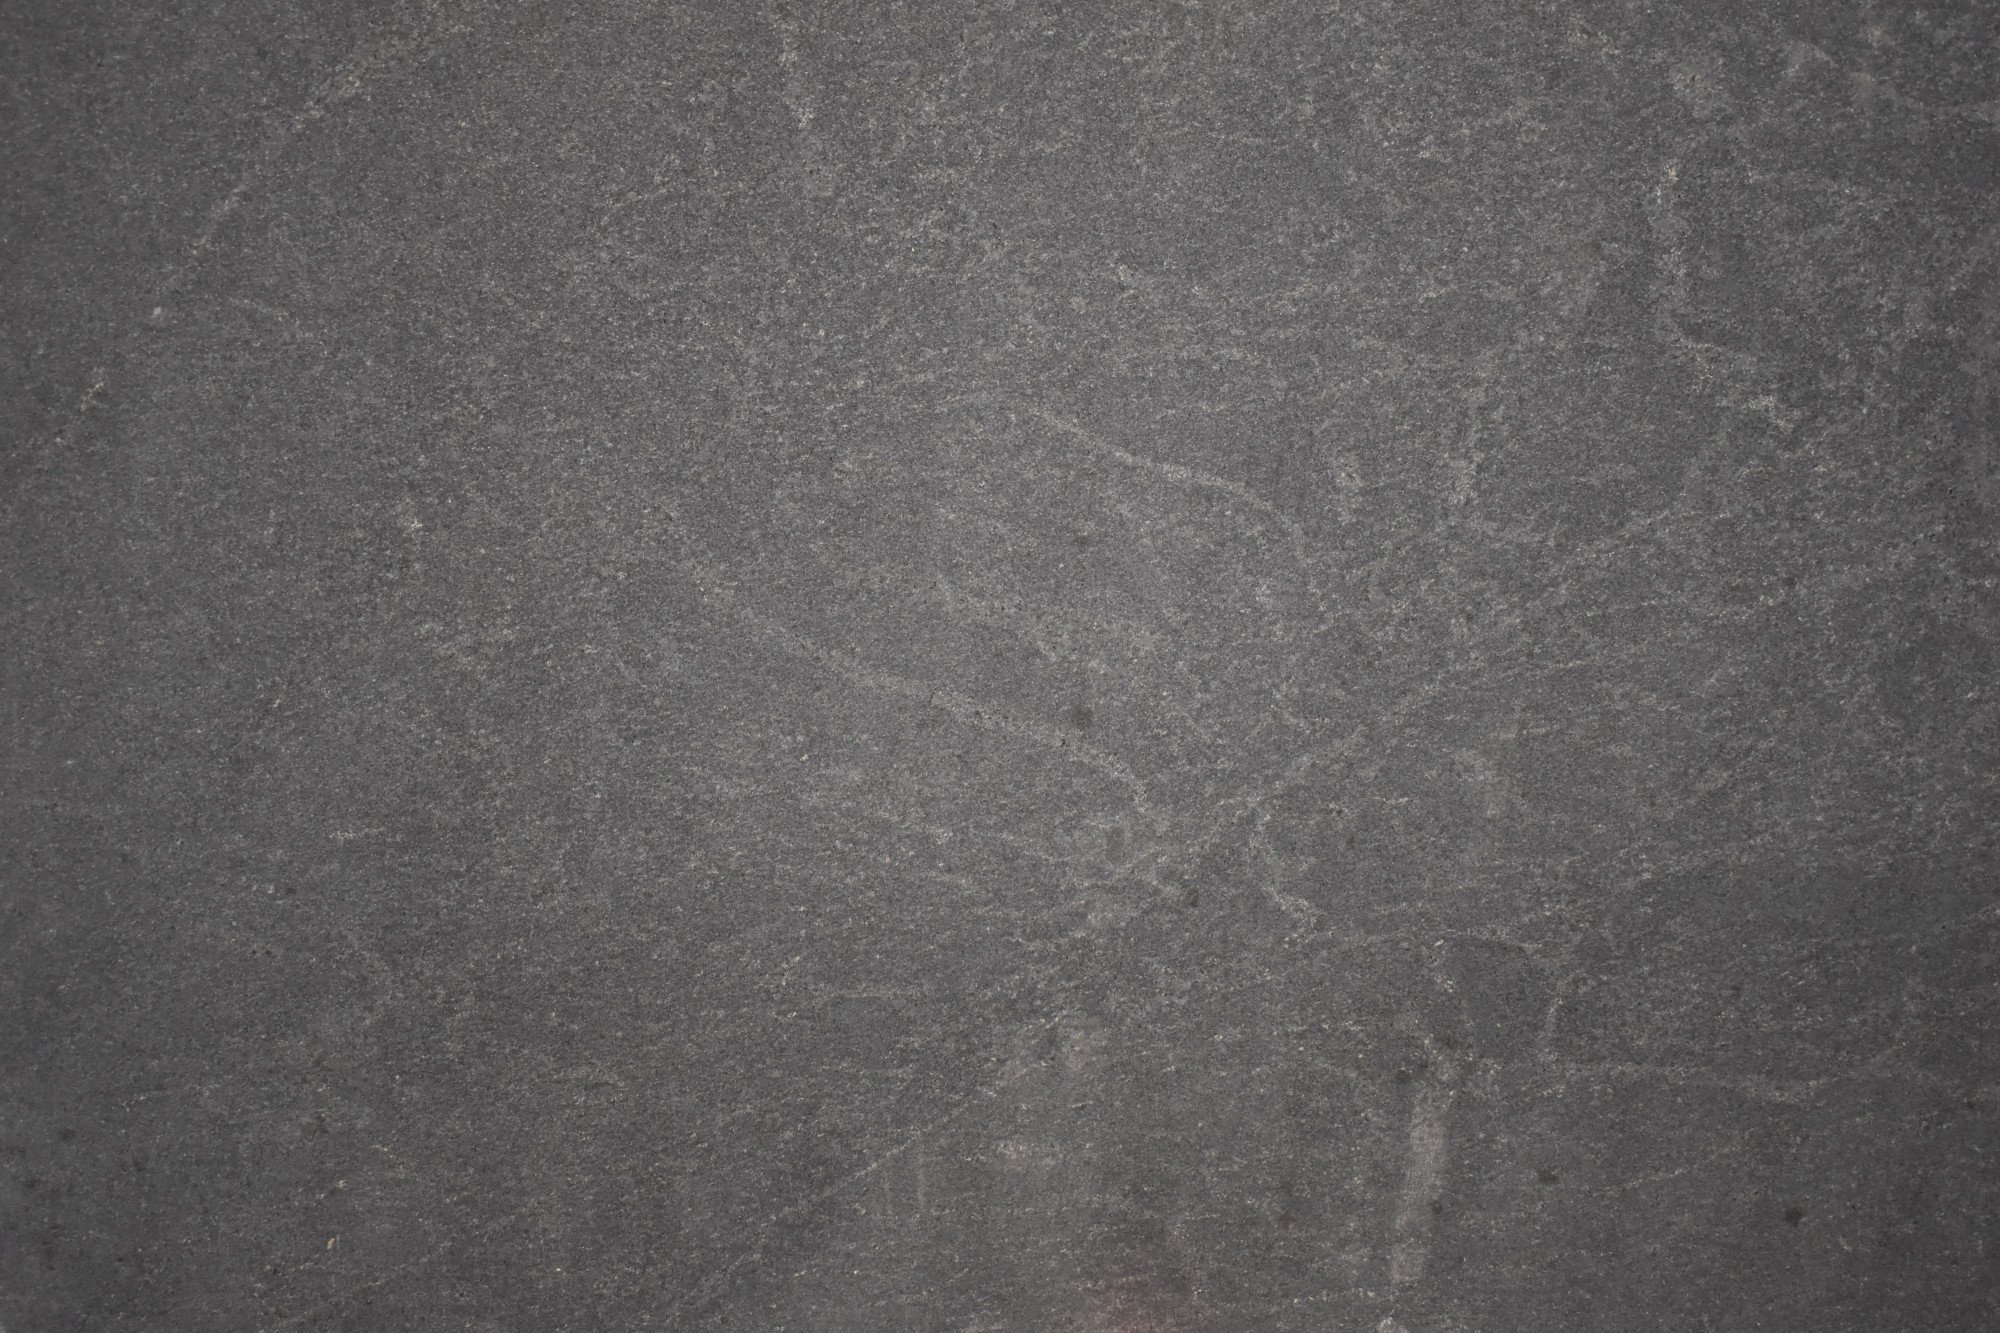 Negresco Honed Granite